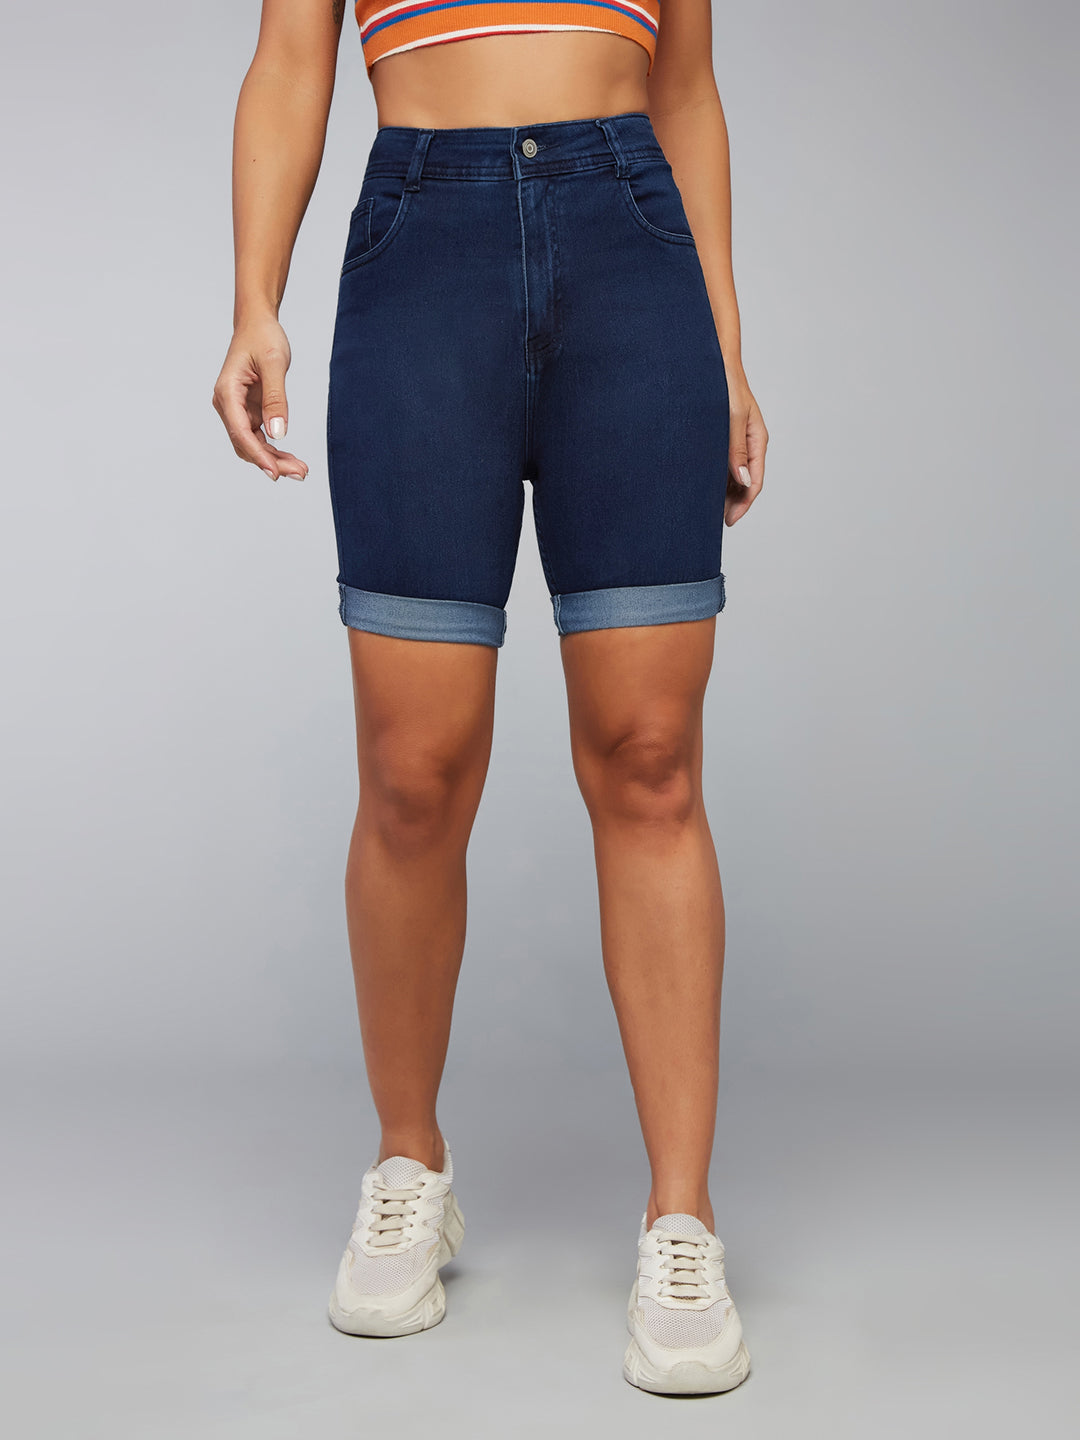 Women's Navy Blue Skinny High Rise Clean Look Regular Length Stretchable Denim Shorts